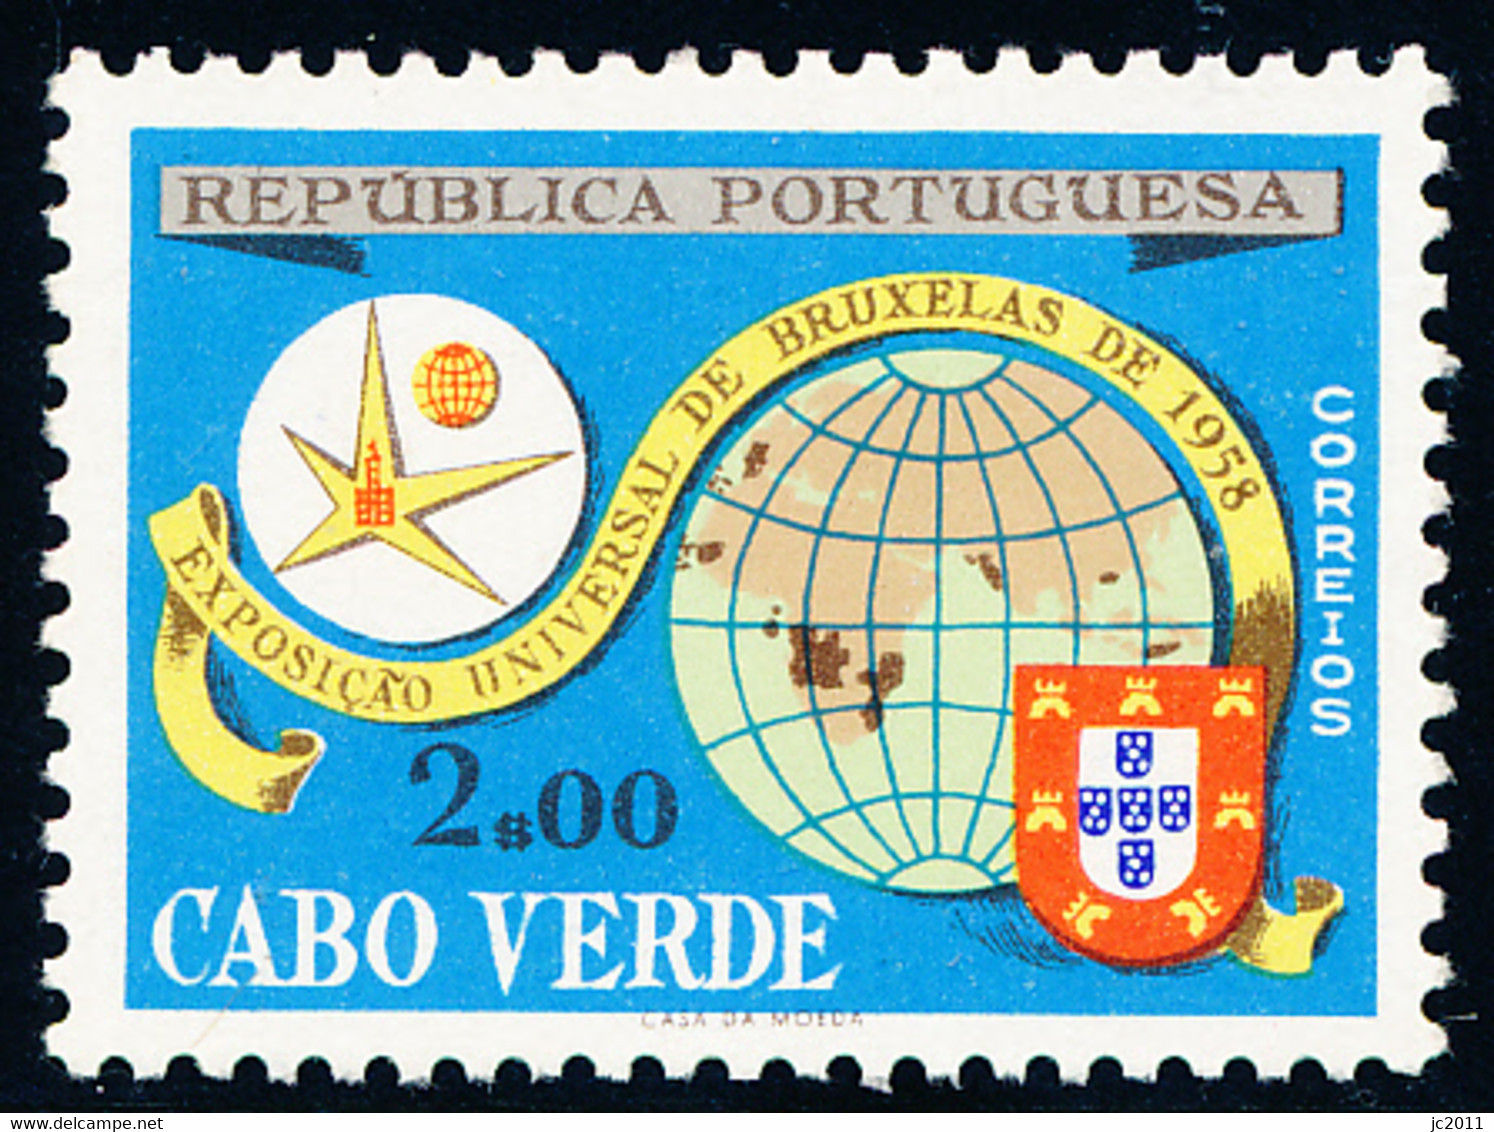 Cabo Verde - 1958 - Brussels International Exhibition - MNH - Cape Verde